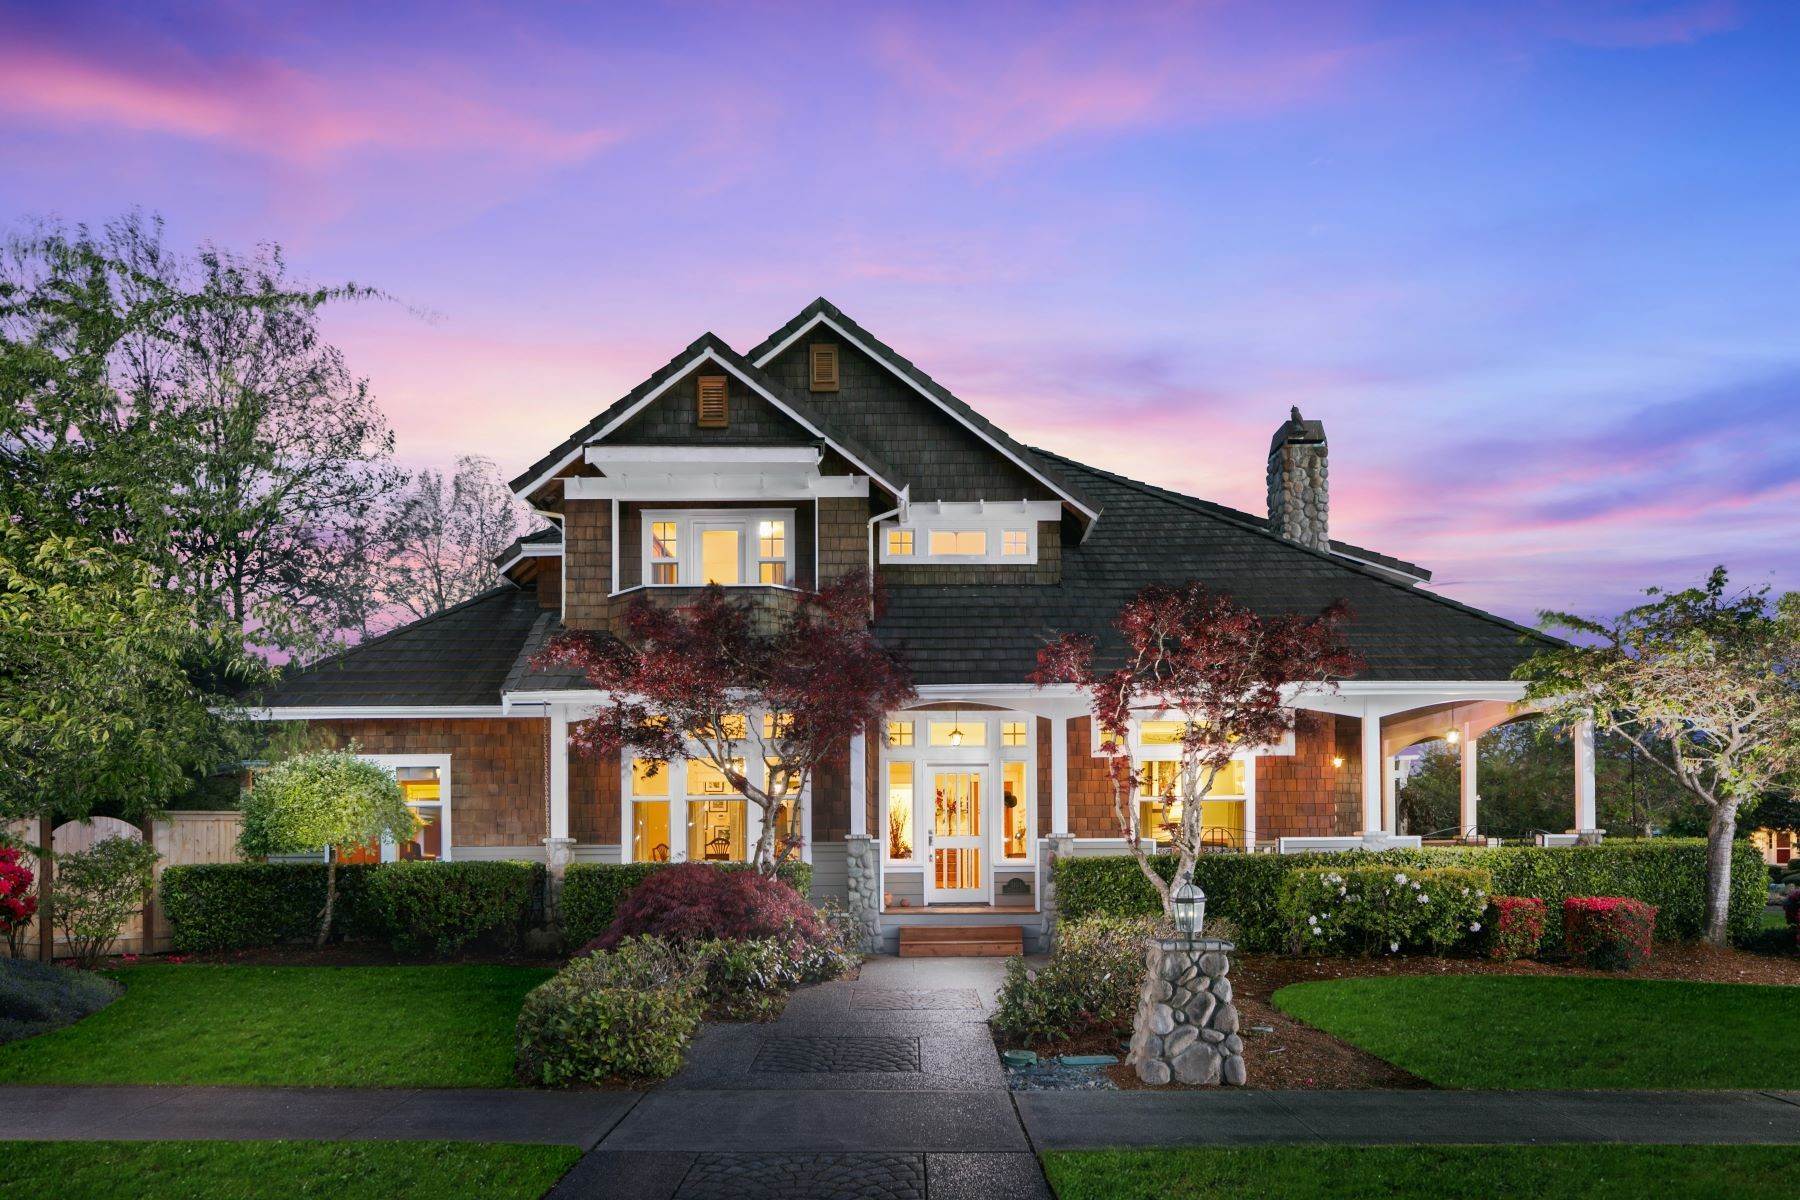 Single Family Homes for Sale at Stunning Craftsman Home 1121 N Sunset Ct Tacoma, Washington 98406 United States